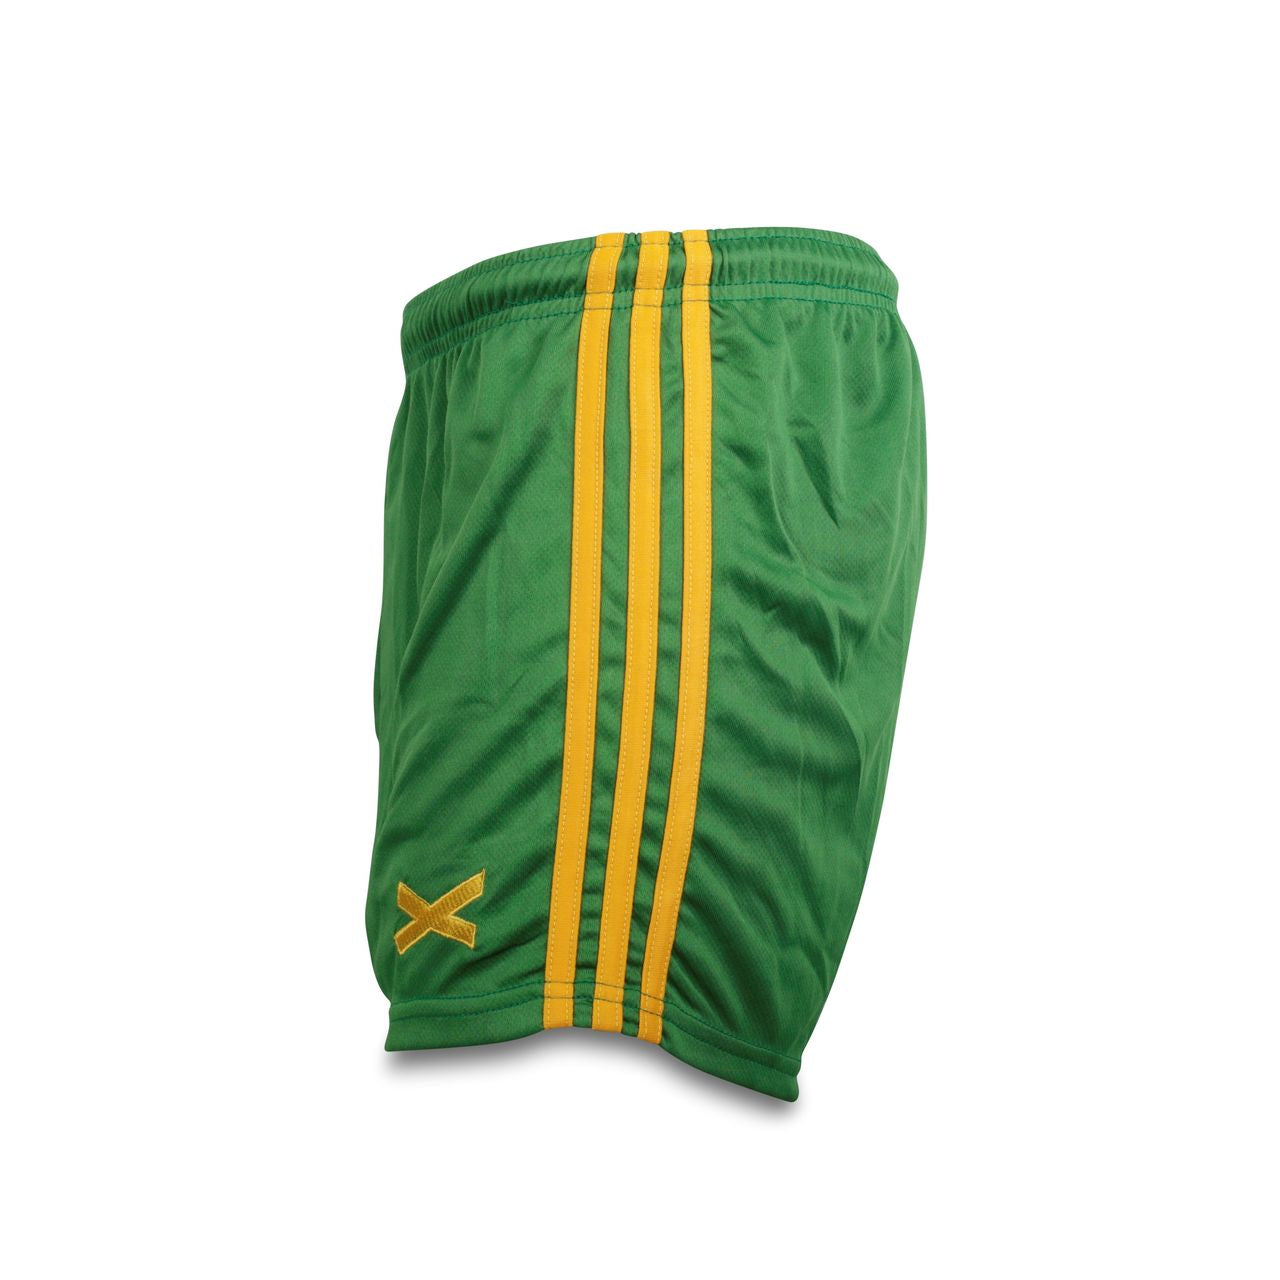 GAA Shorts Green with Yellow Stripes Gaelic Games Sportswear